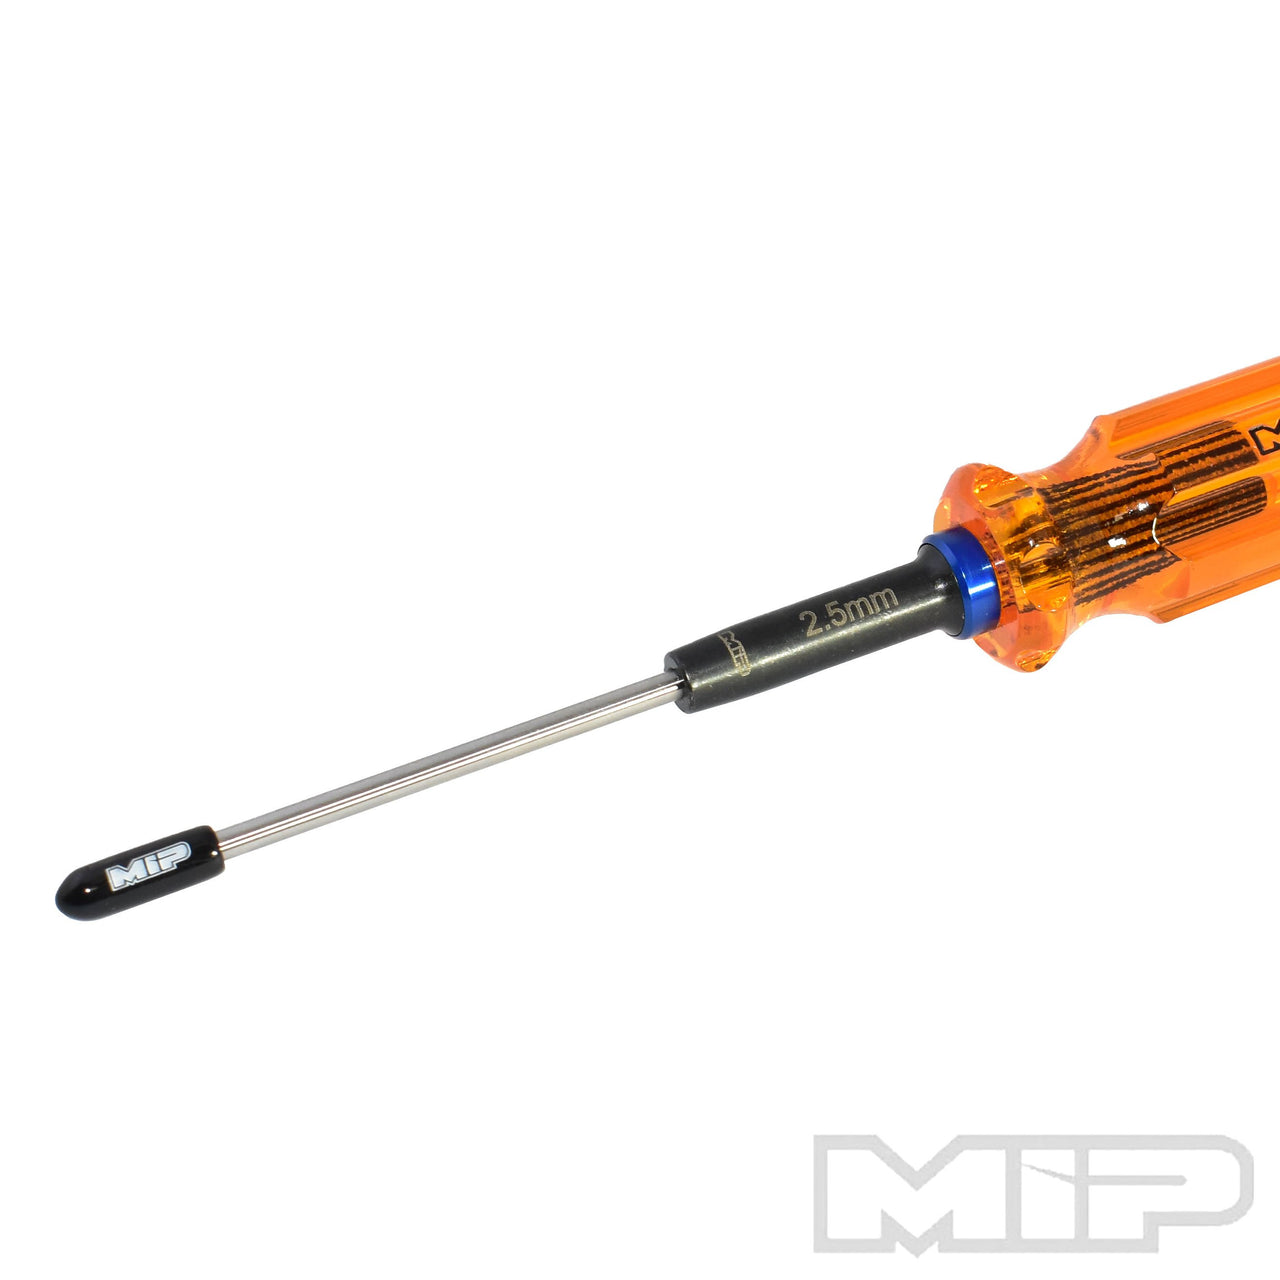 MIP 2.5mm Hex Driver Wrench Gen 2 T#9209